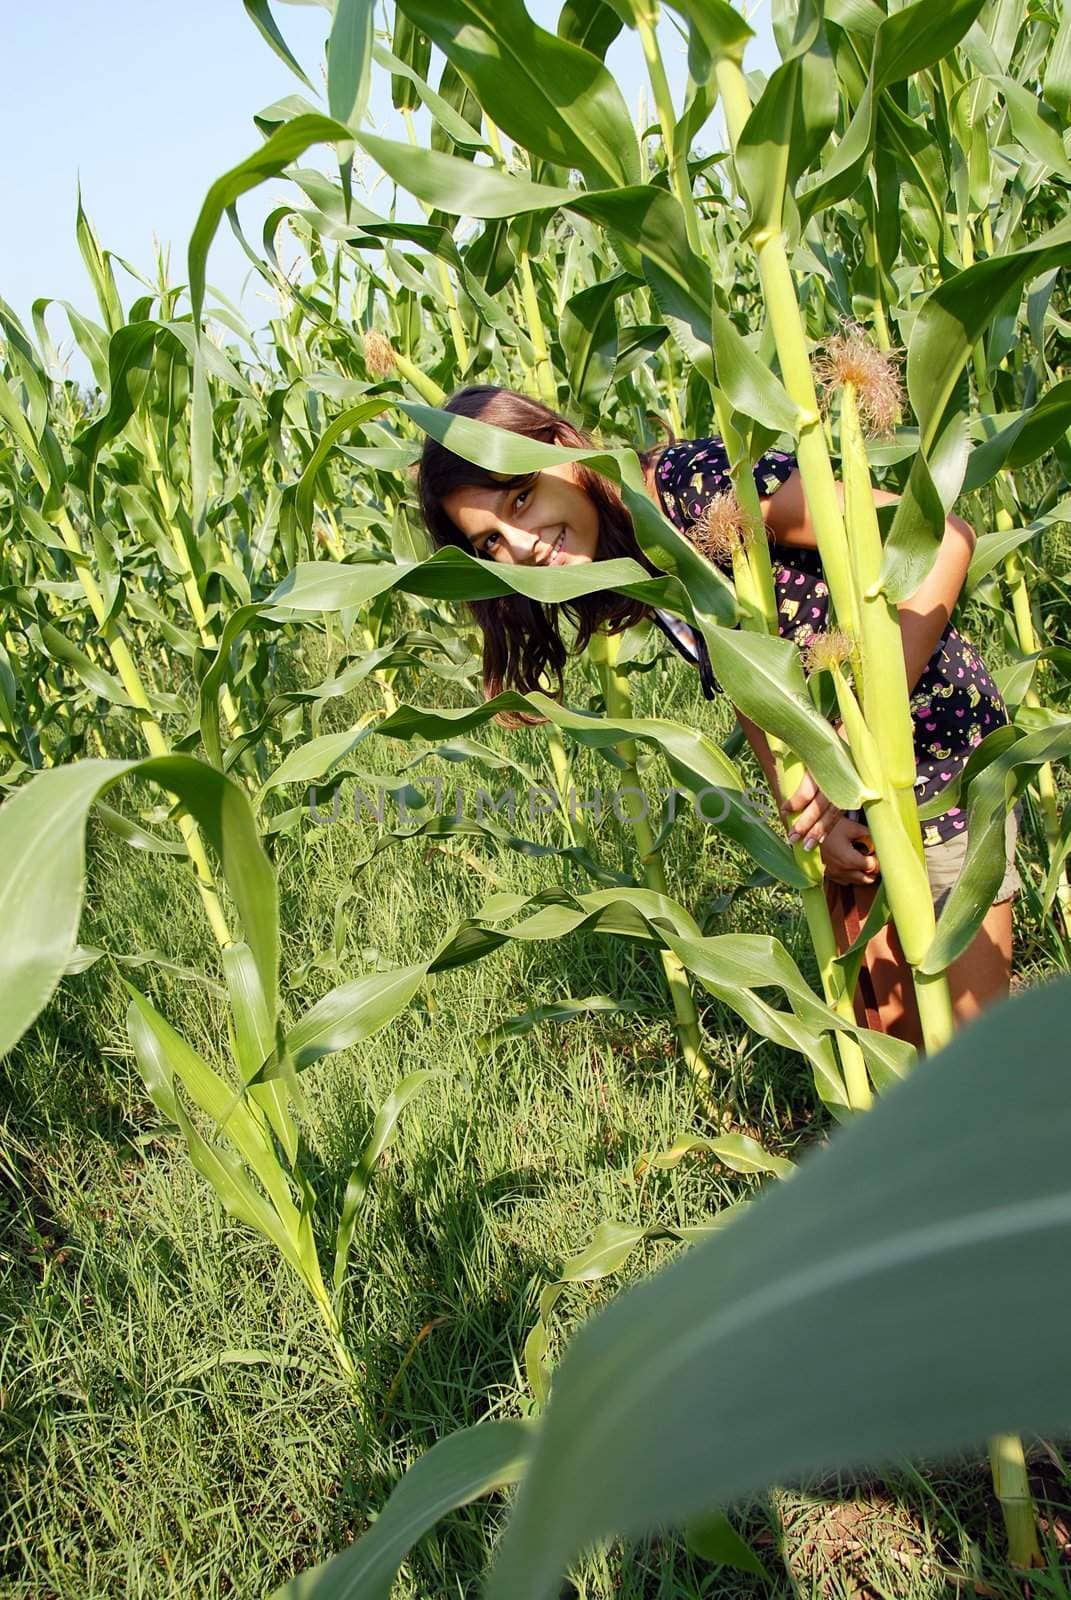 teenage girl hiding on corn field smiling